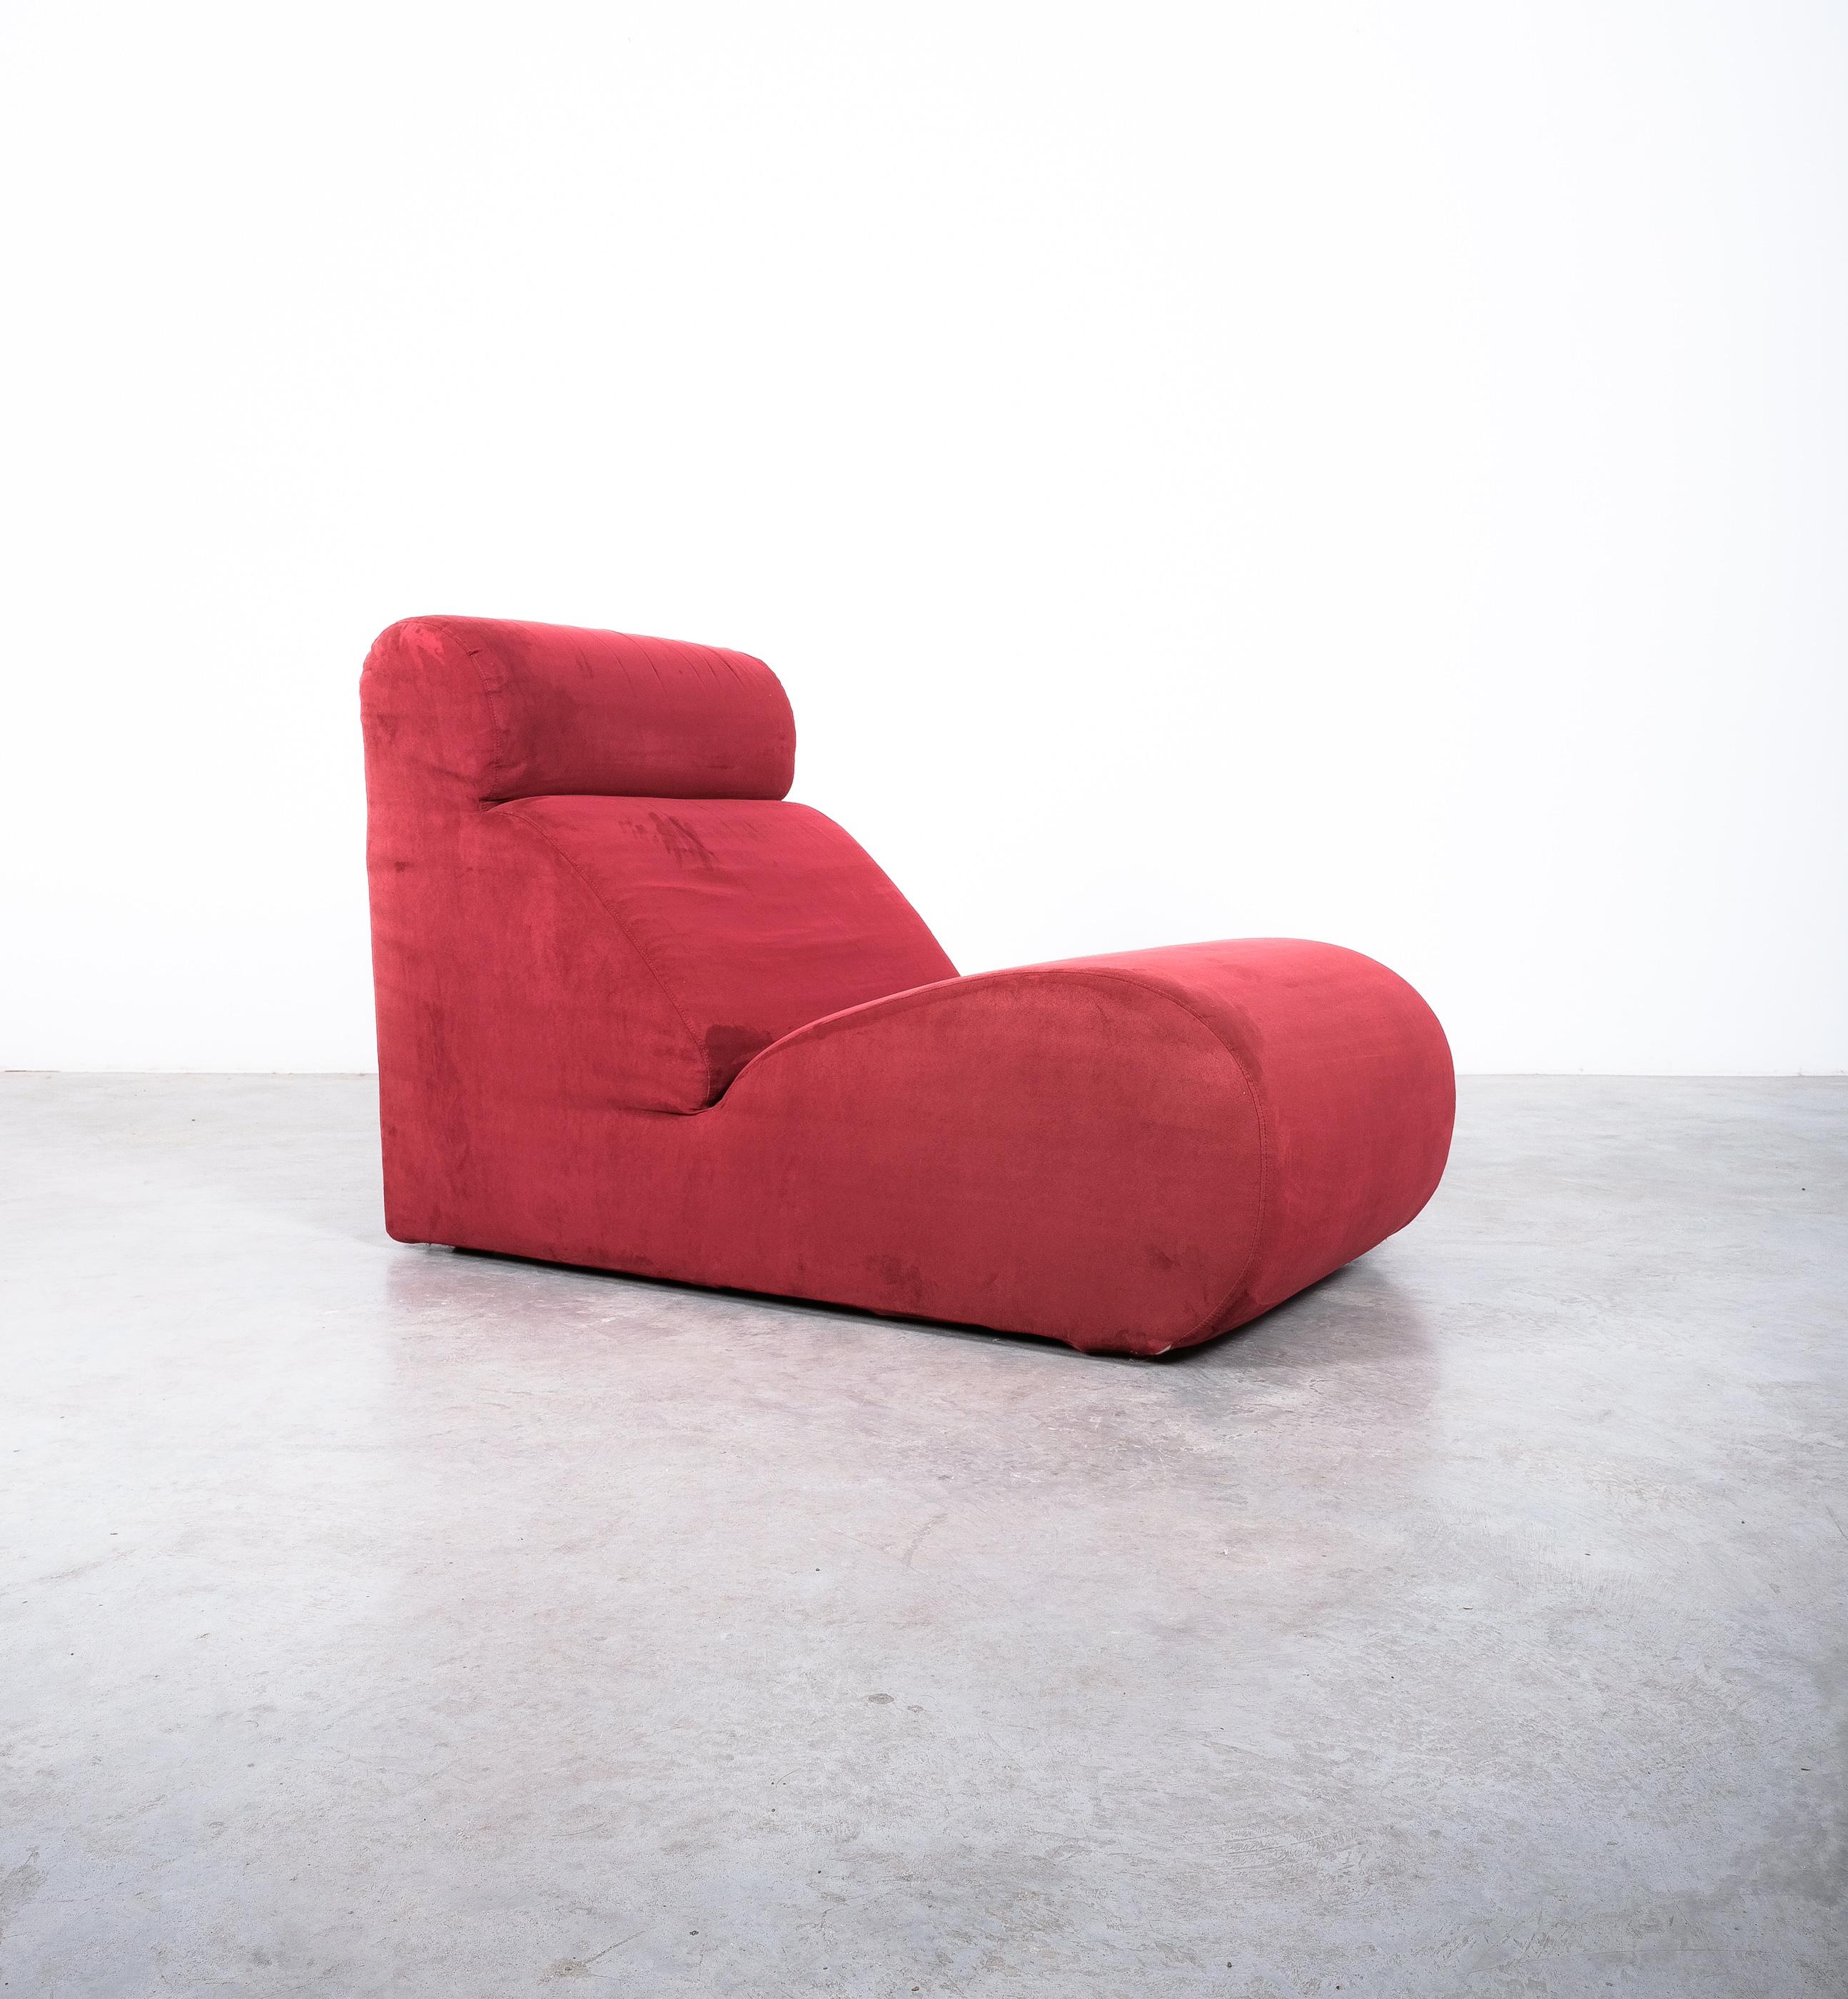 Mid-Century Modern Boborelax Chair Cini Boeri For Arflex Red Velvet, Italy, circa 1955 For Sale